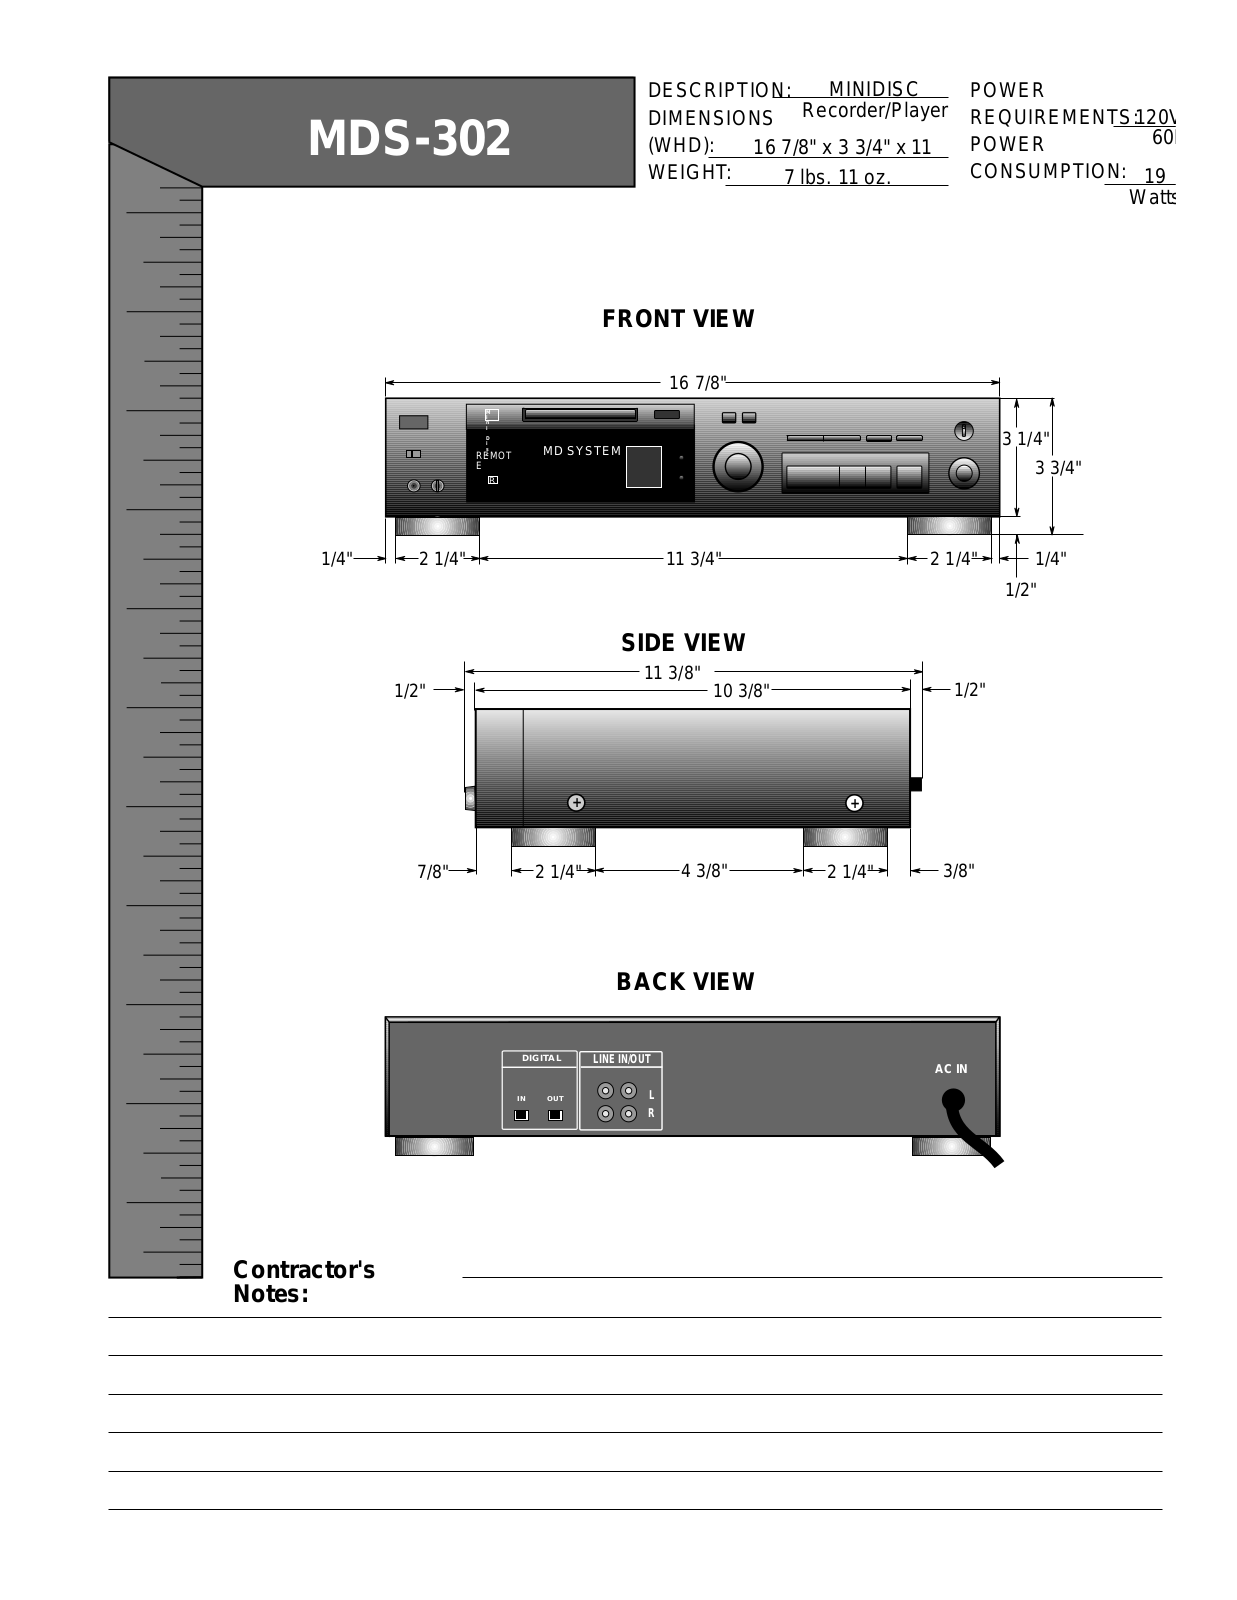 Sony MDS-302 User Manual